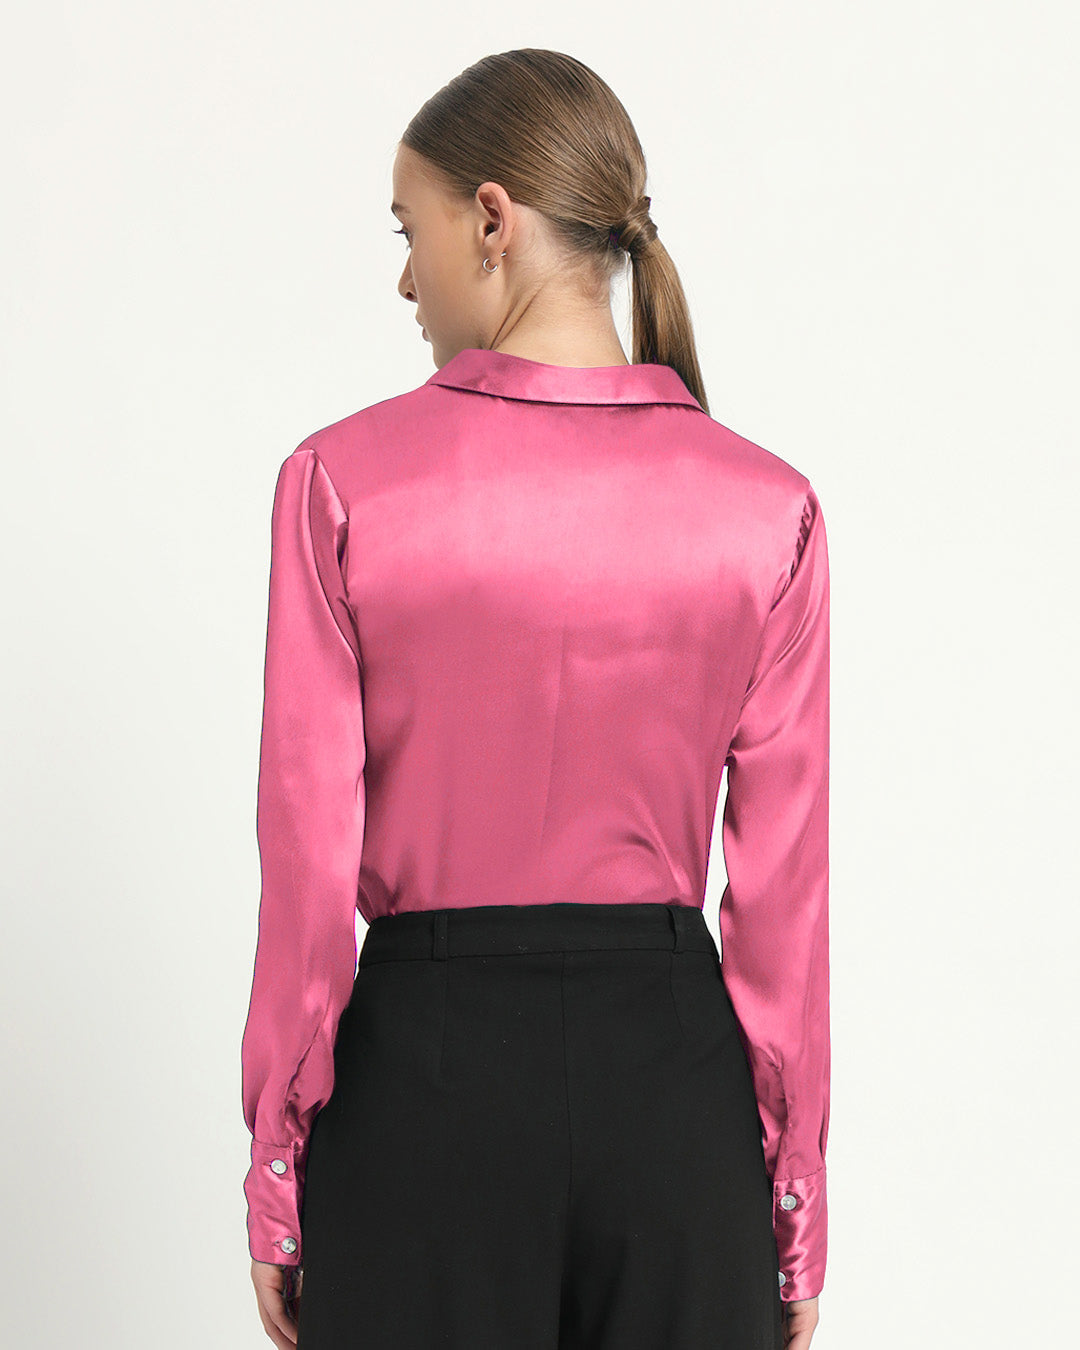 Satin Effect Formal French Rose Shirt